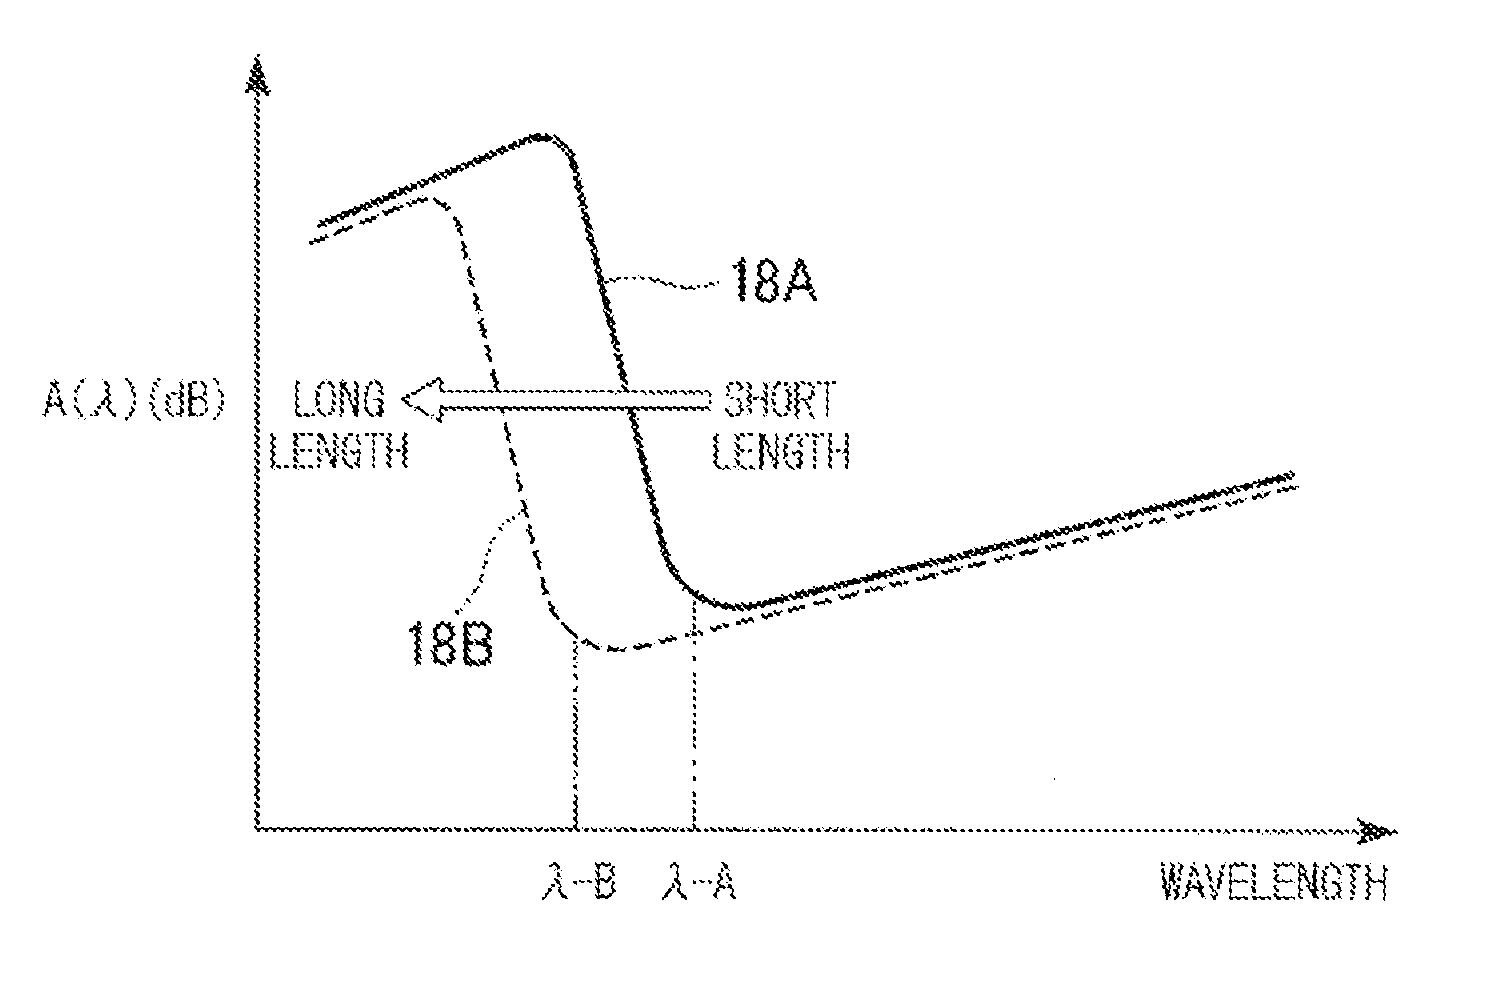 Method of measuring cut-off wavelength of optical fiber